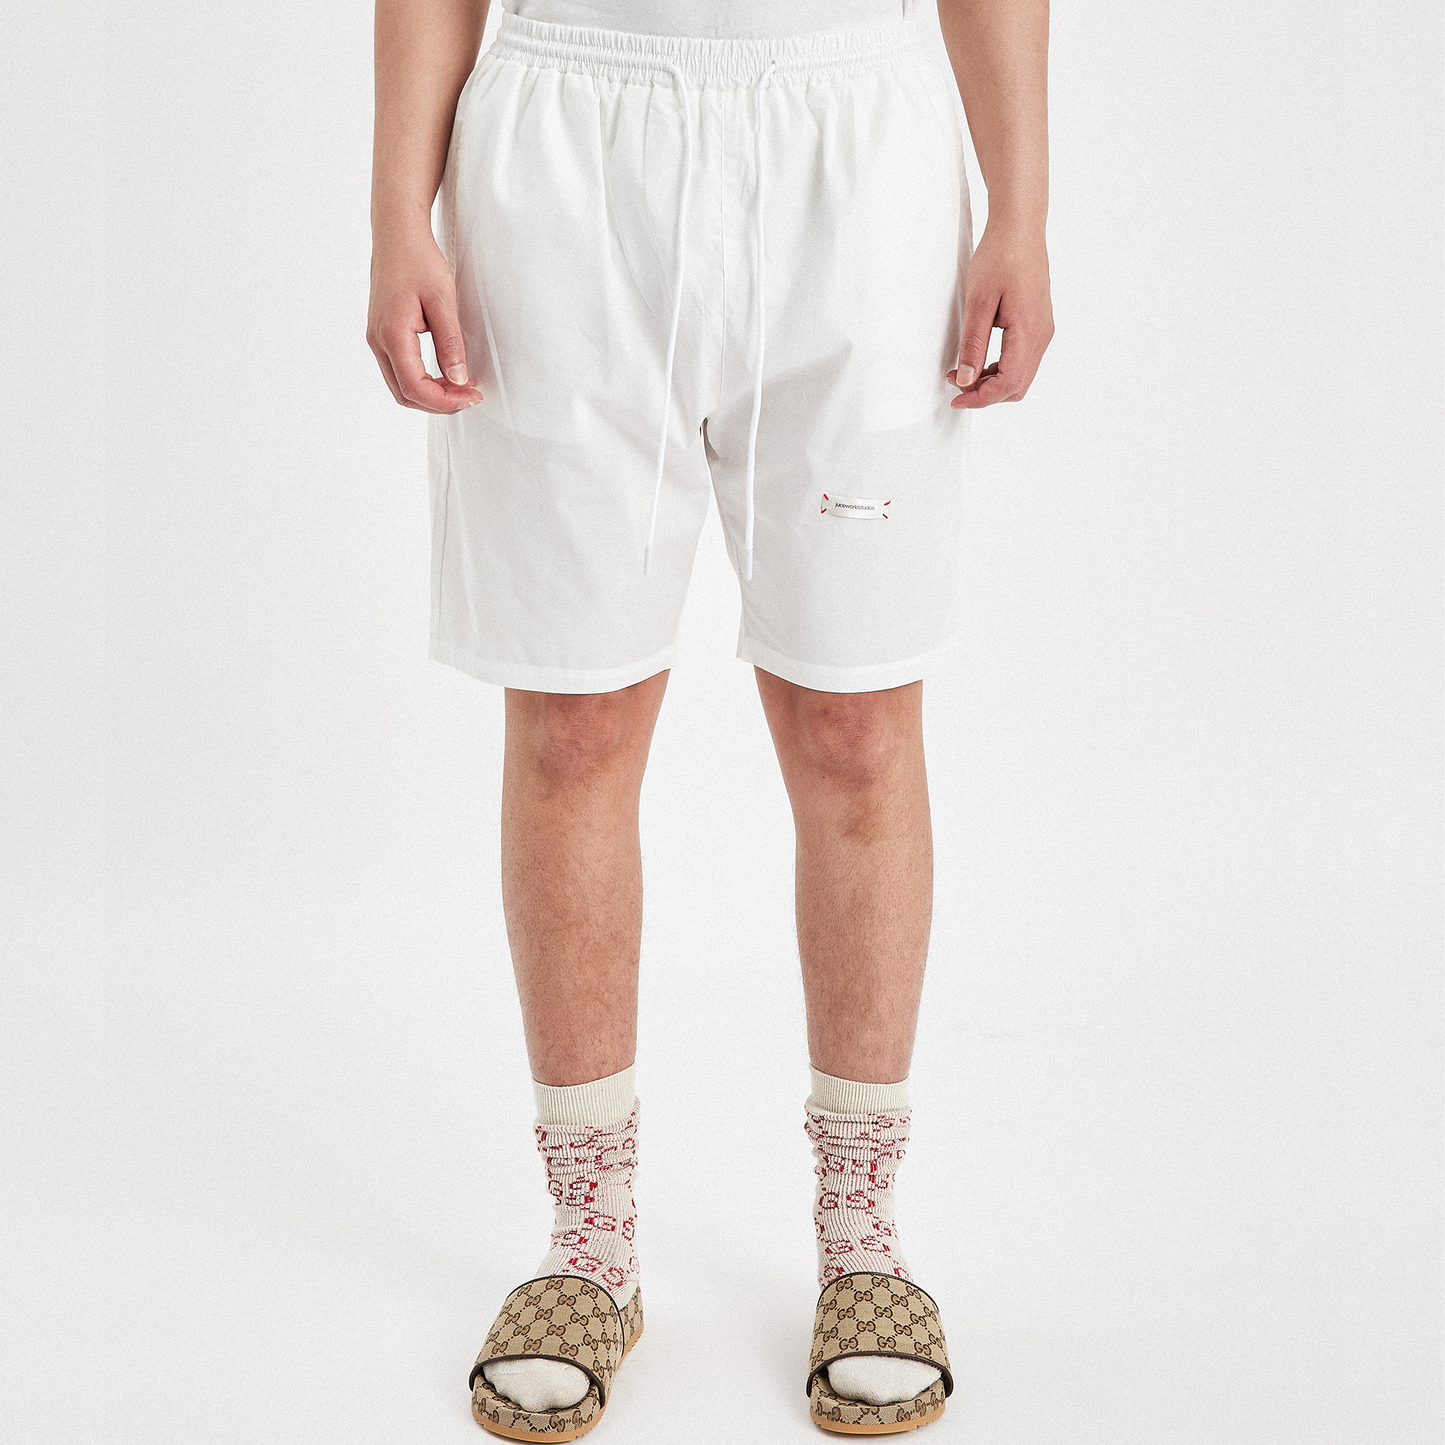 Ivory White Shorts